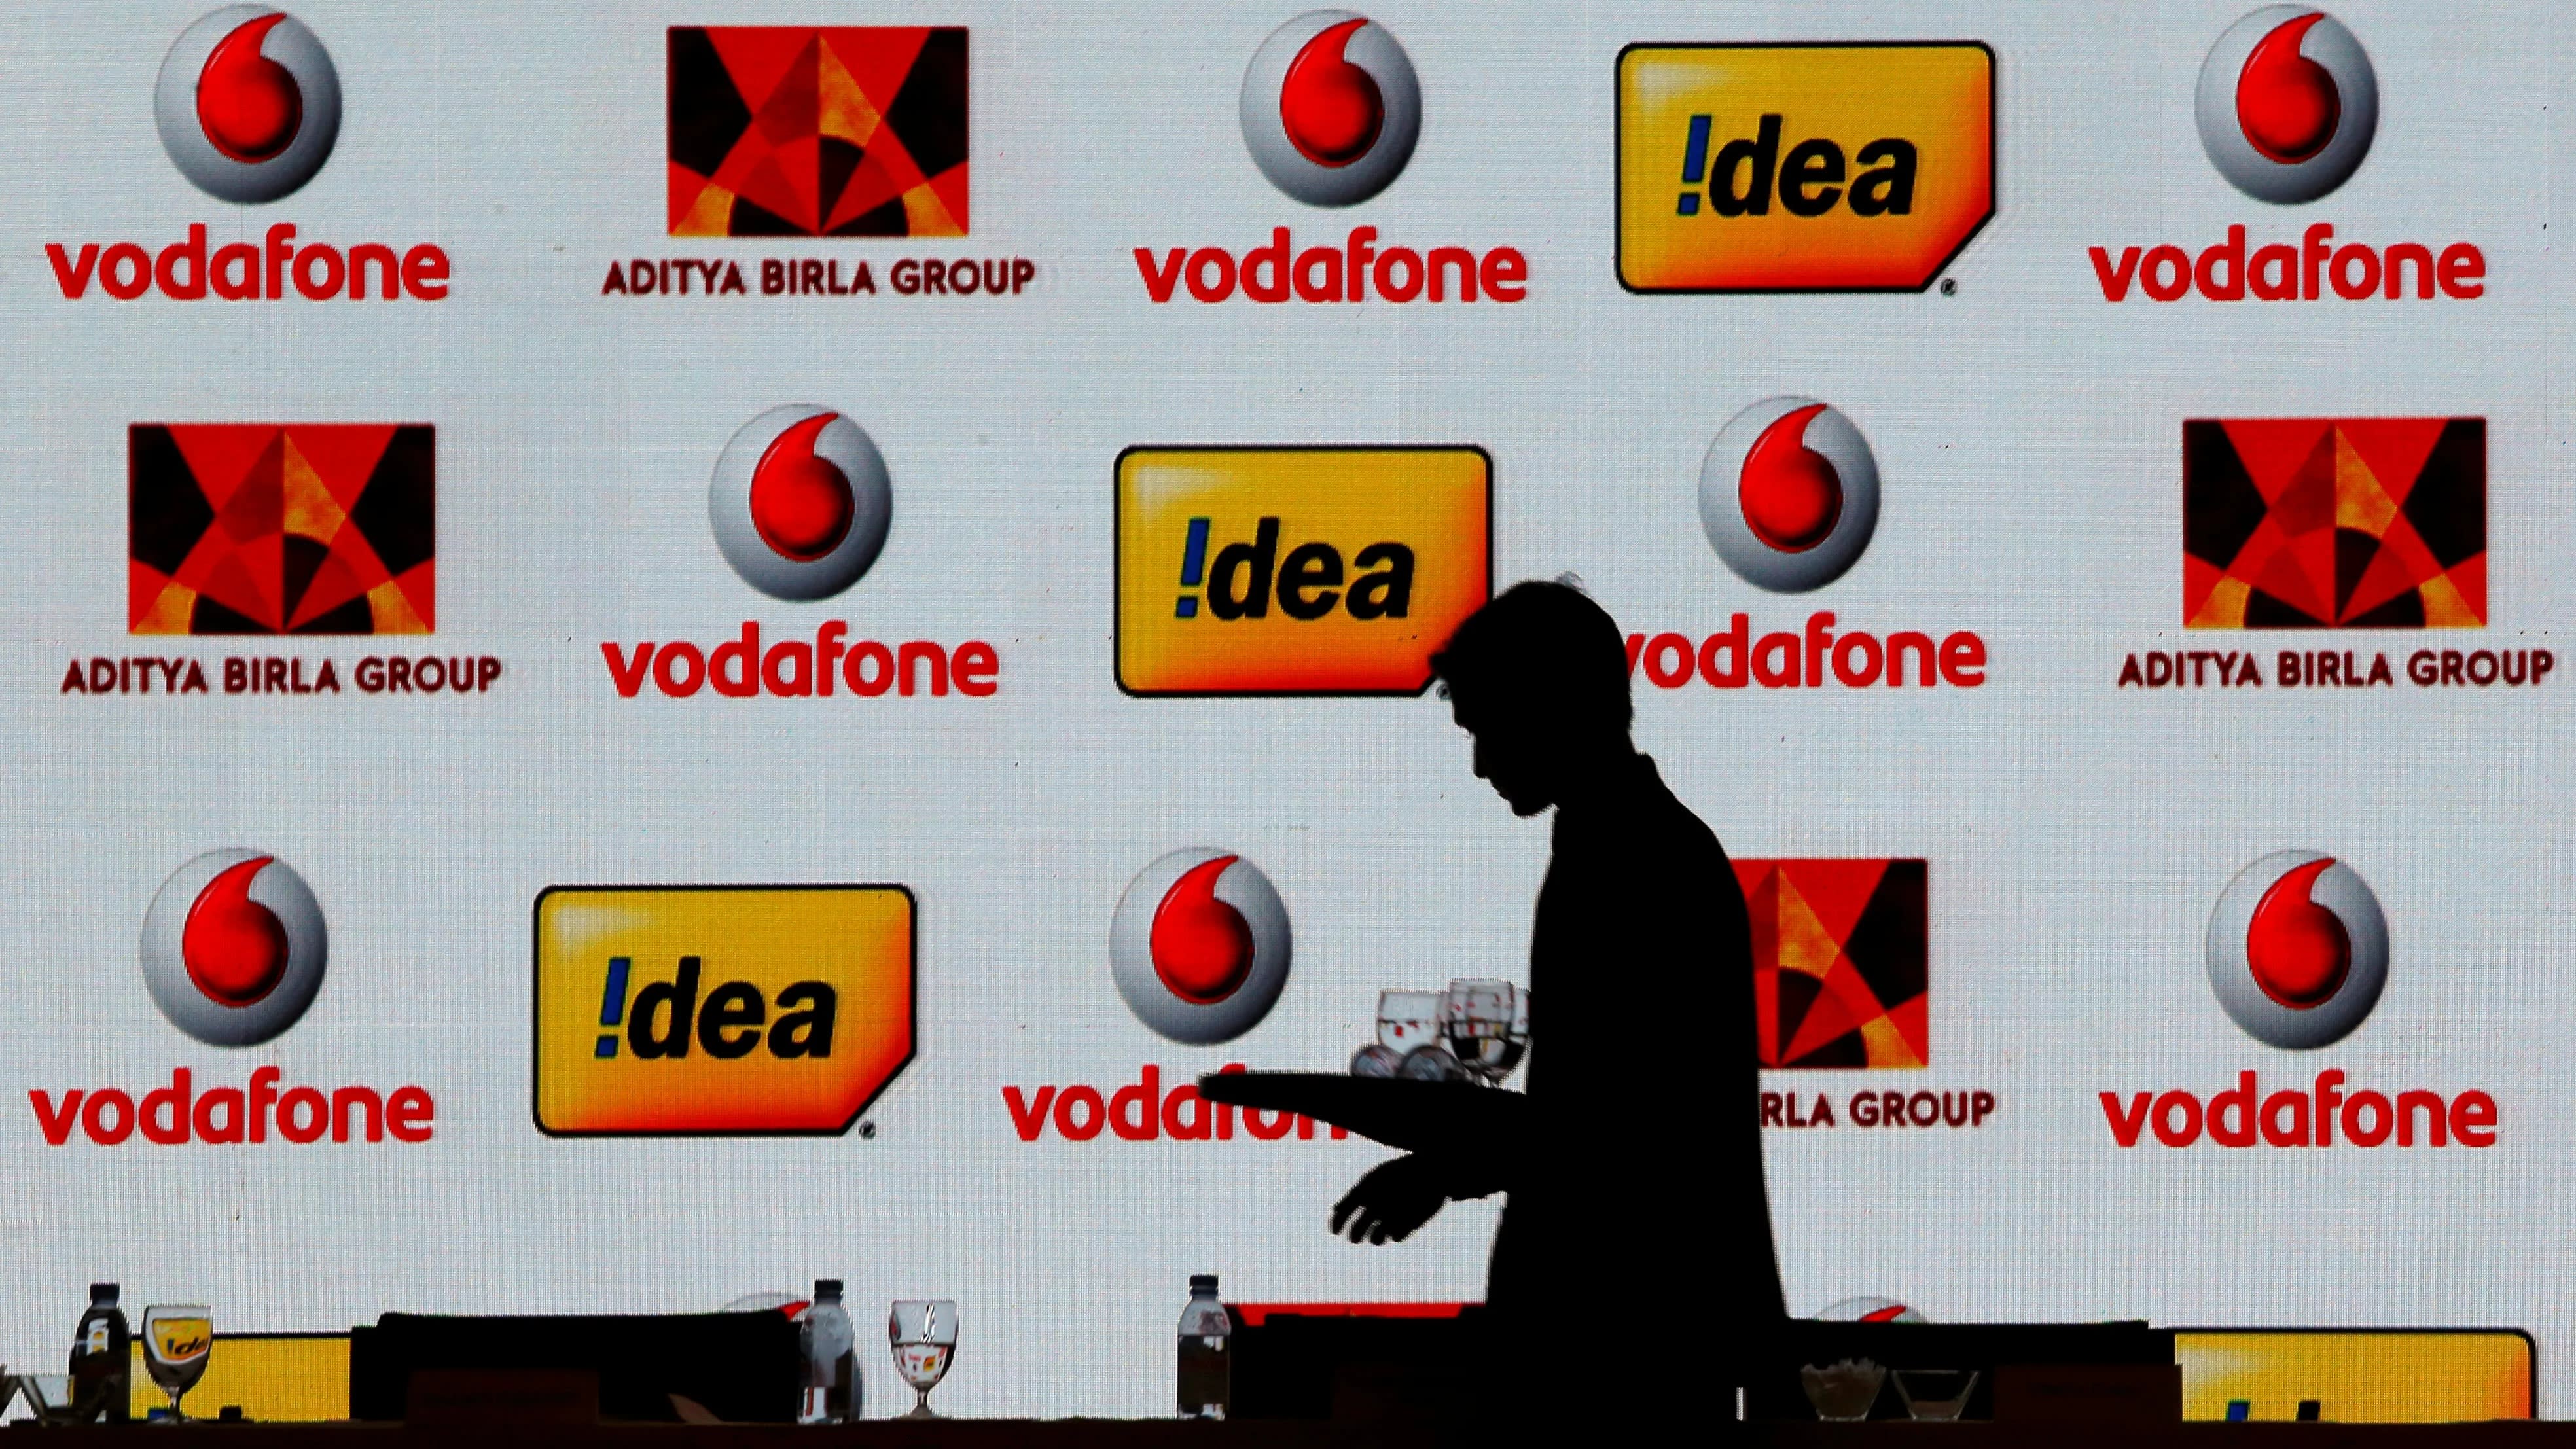 Vodafone Idea likely to find India spectrum moratorium too little